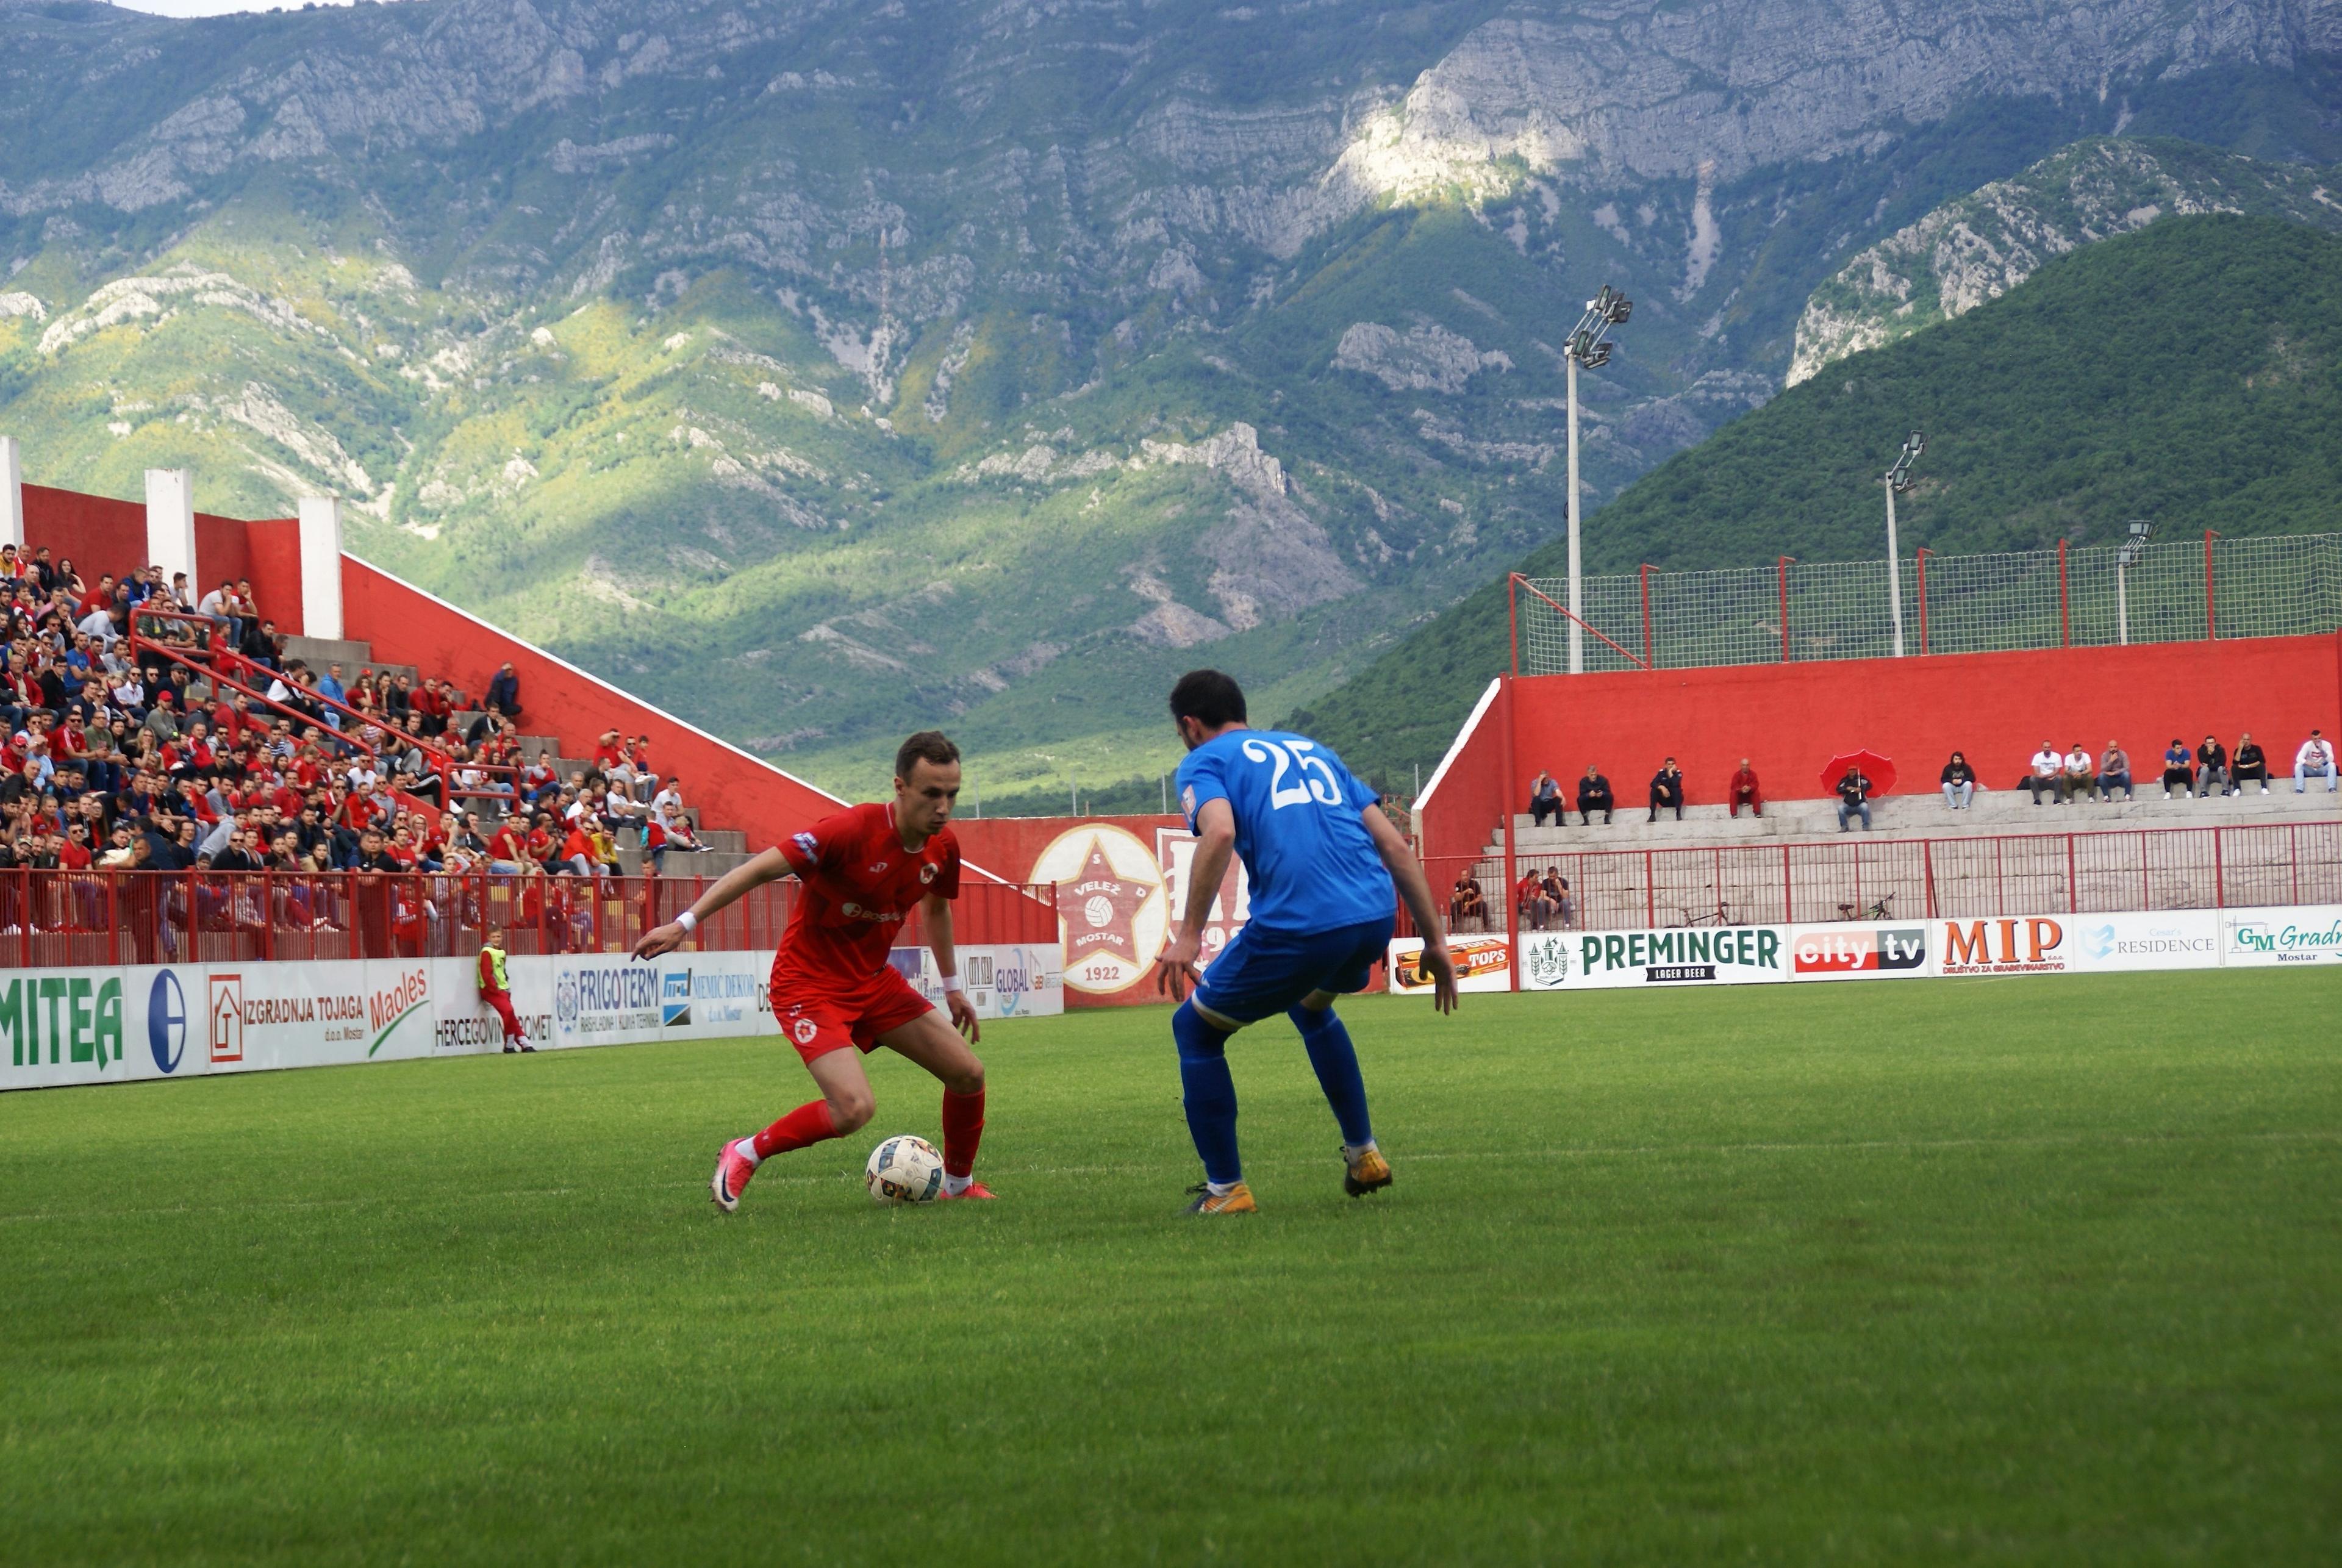 Sa utakmice u Mostaru: Nova pobjeda Veleža - Avaz